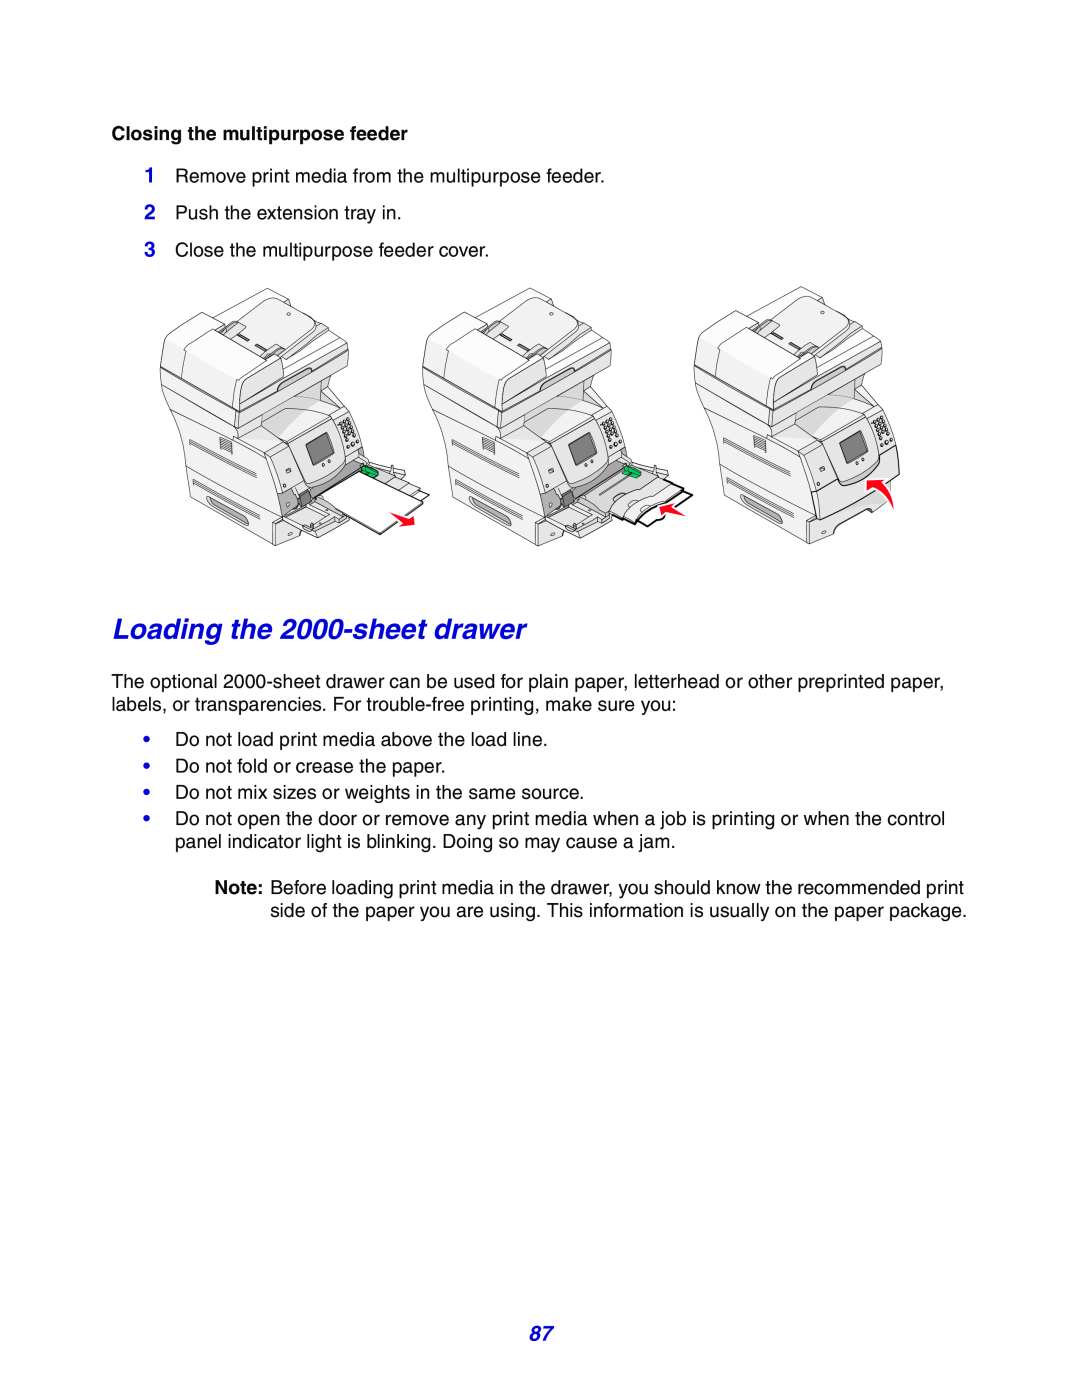 Lexmark X642e manual Loading the 2000-sheet drawer, Closing the multipurpose feeder 